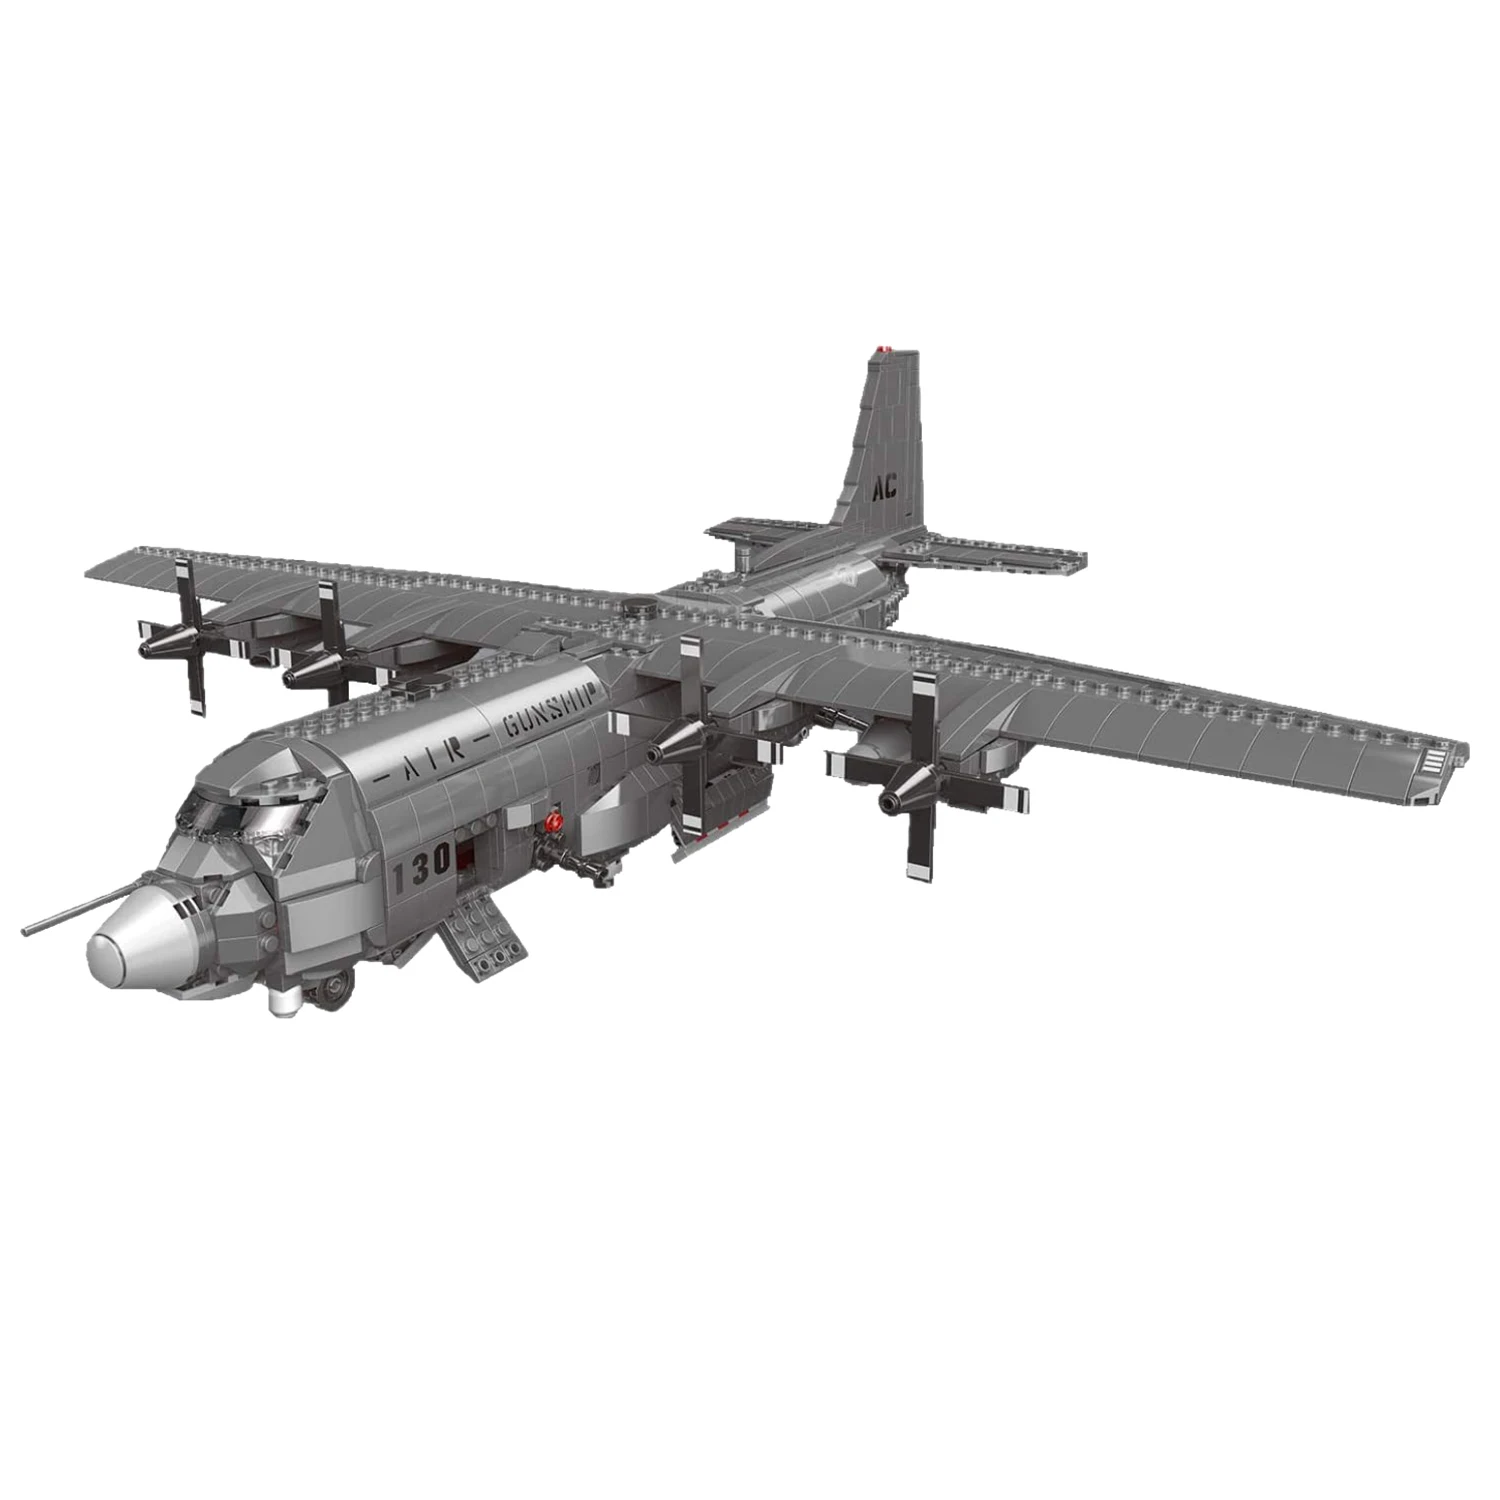 AC130 Gunship Airplane Model Kits, C130 / C 130 Hercules Military War Aircraft (1713 PCS) Planes and Jets Building Blocks Sets